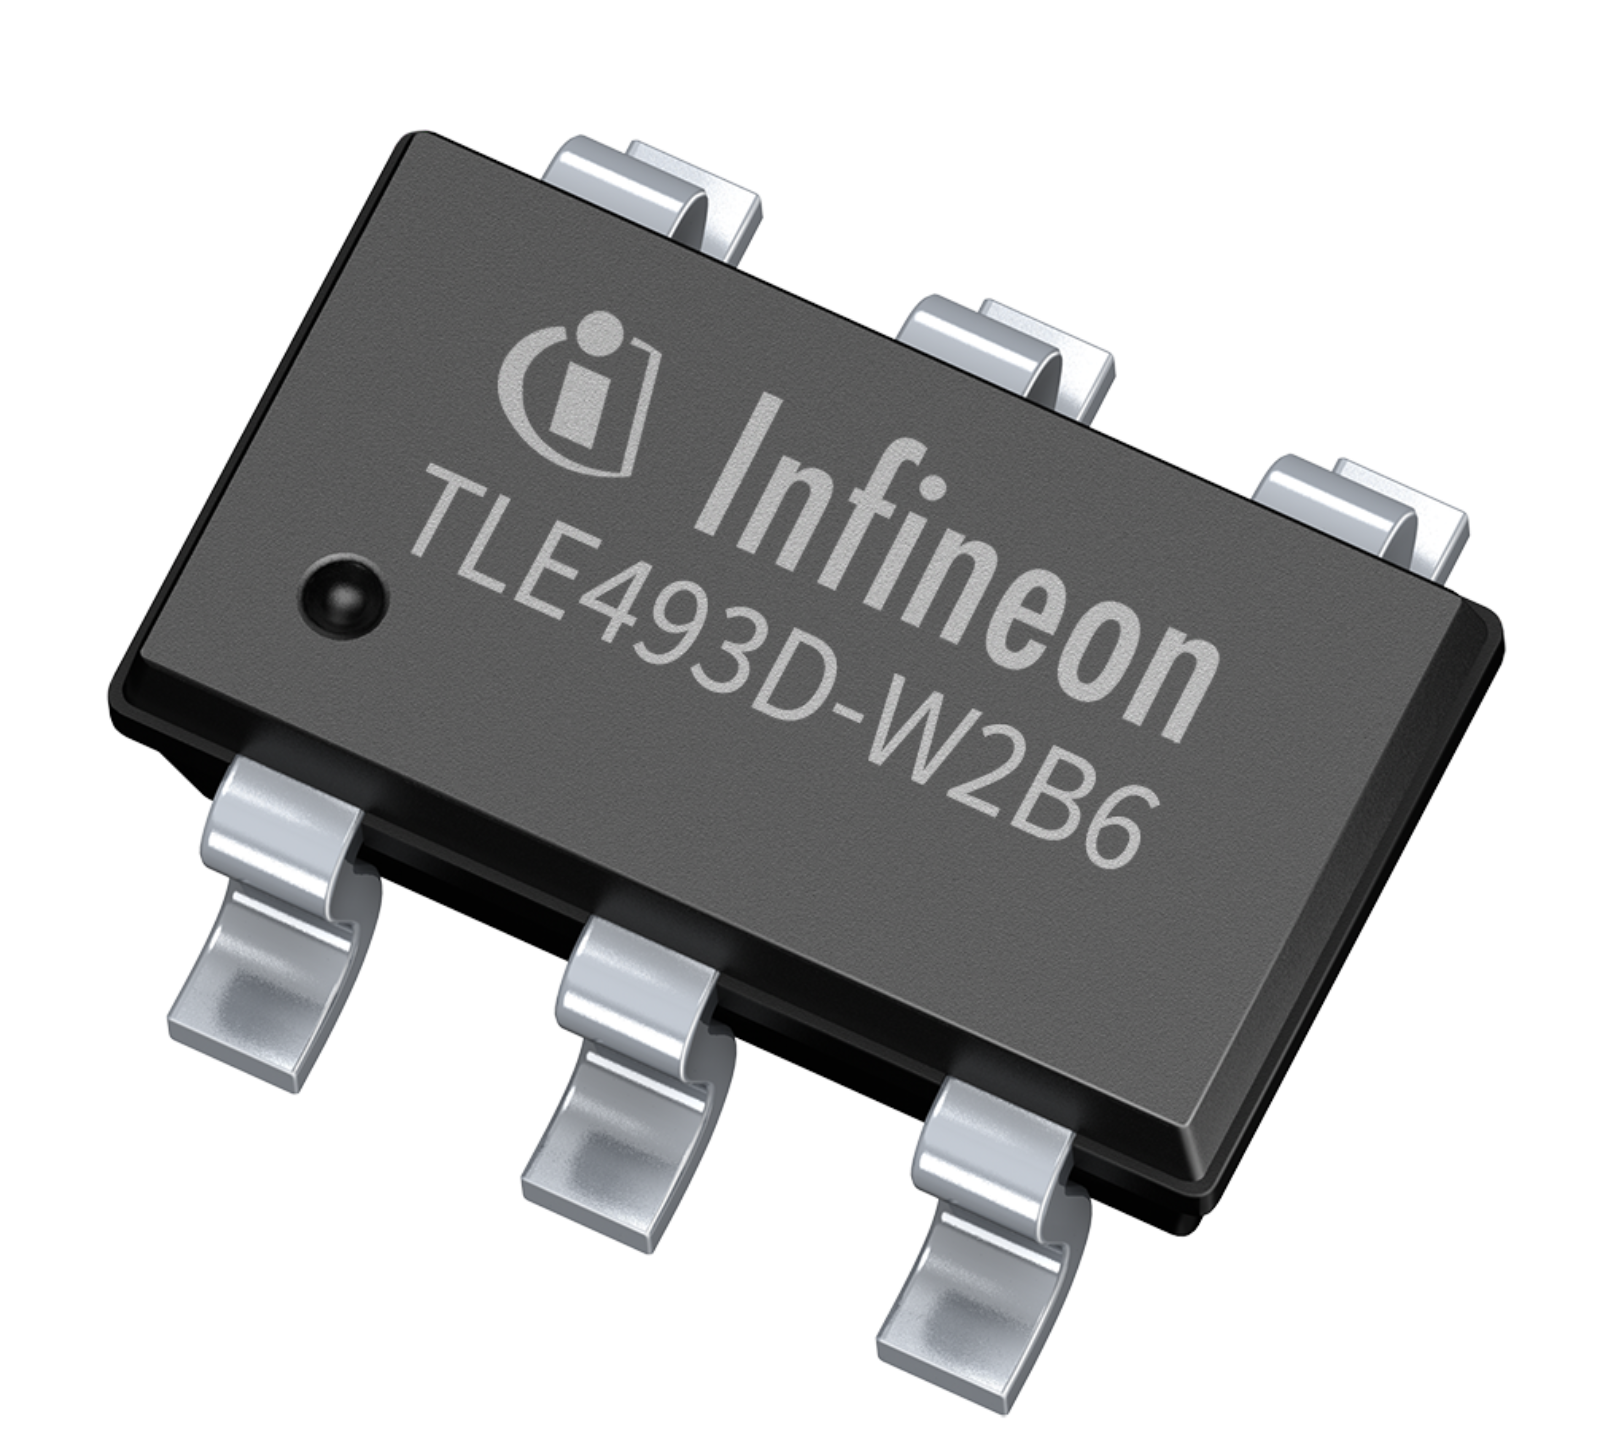 Infineon英飞凌3D磁传感器介绍及选型